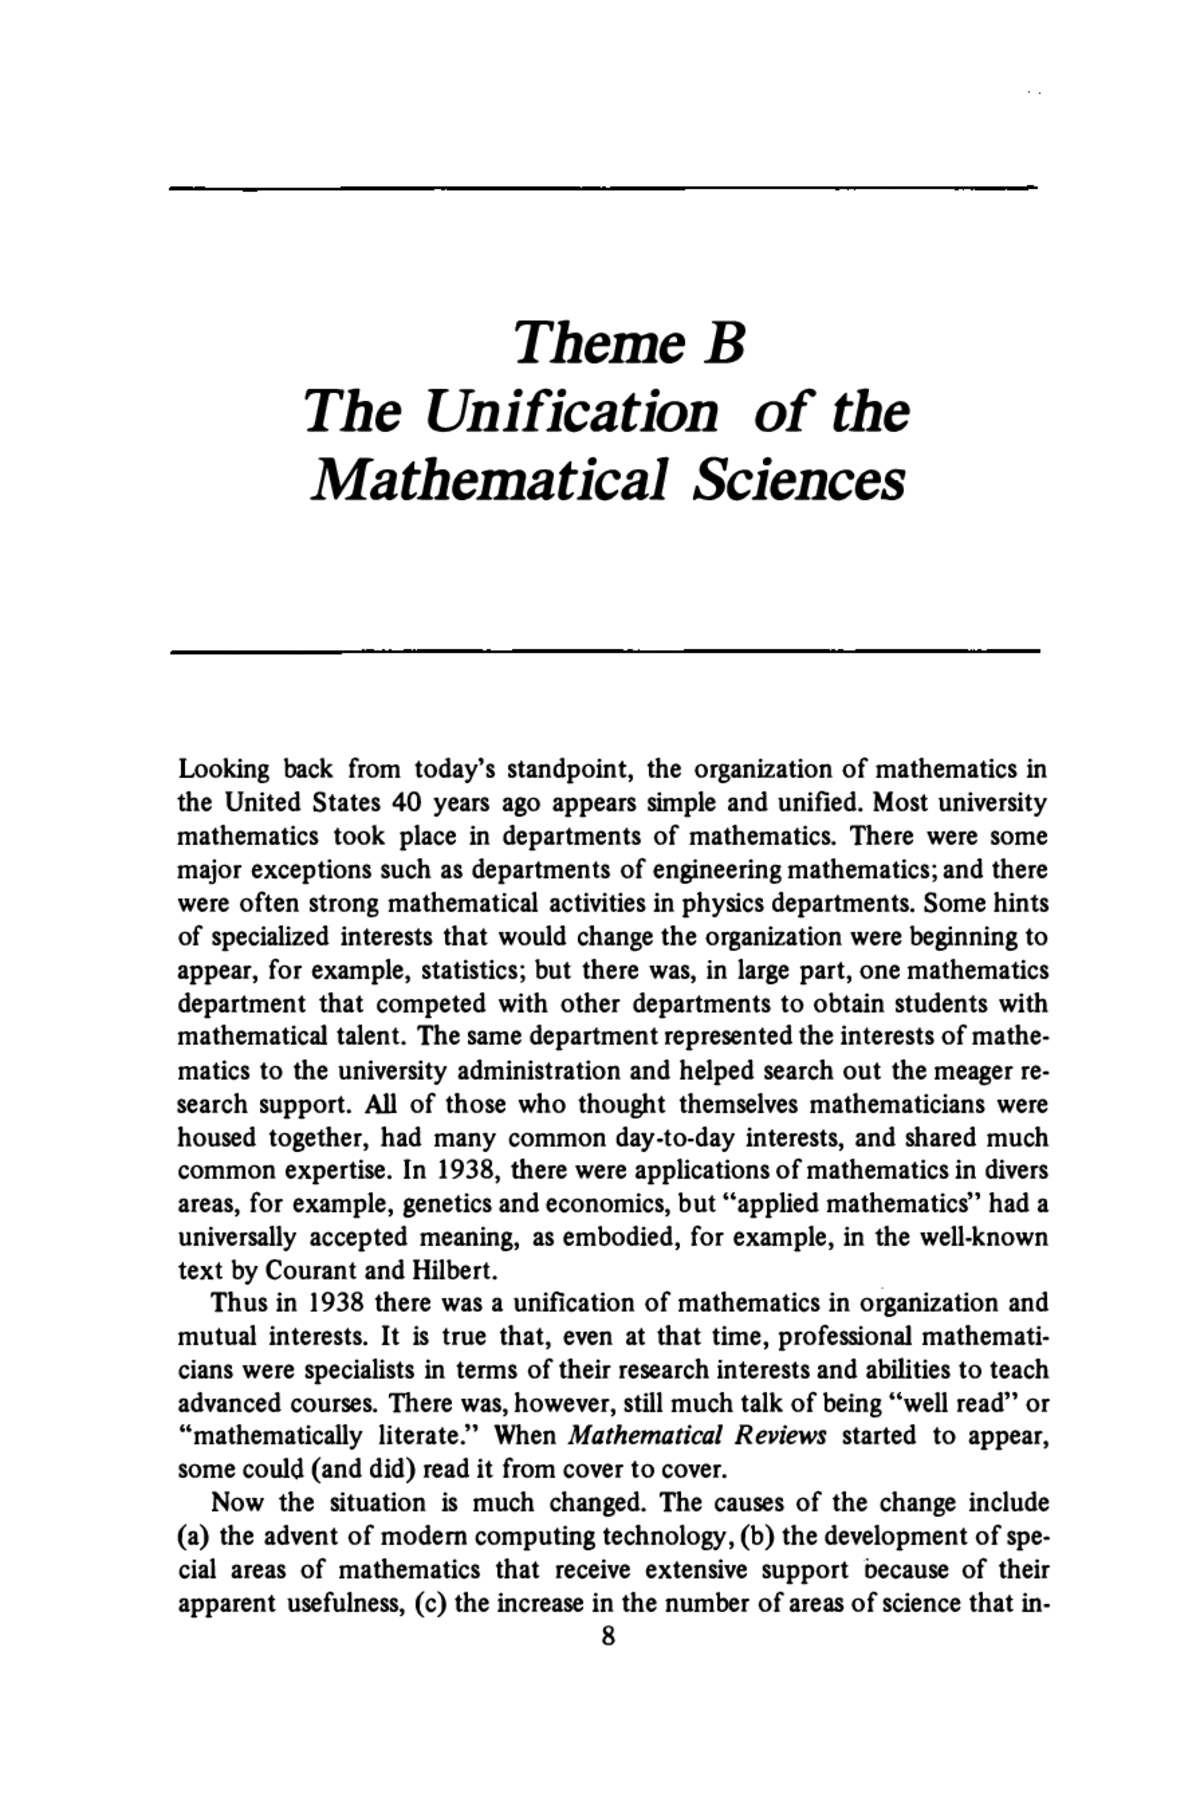 undergraduate research topics in mathematics